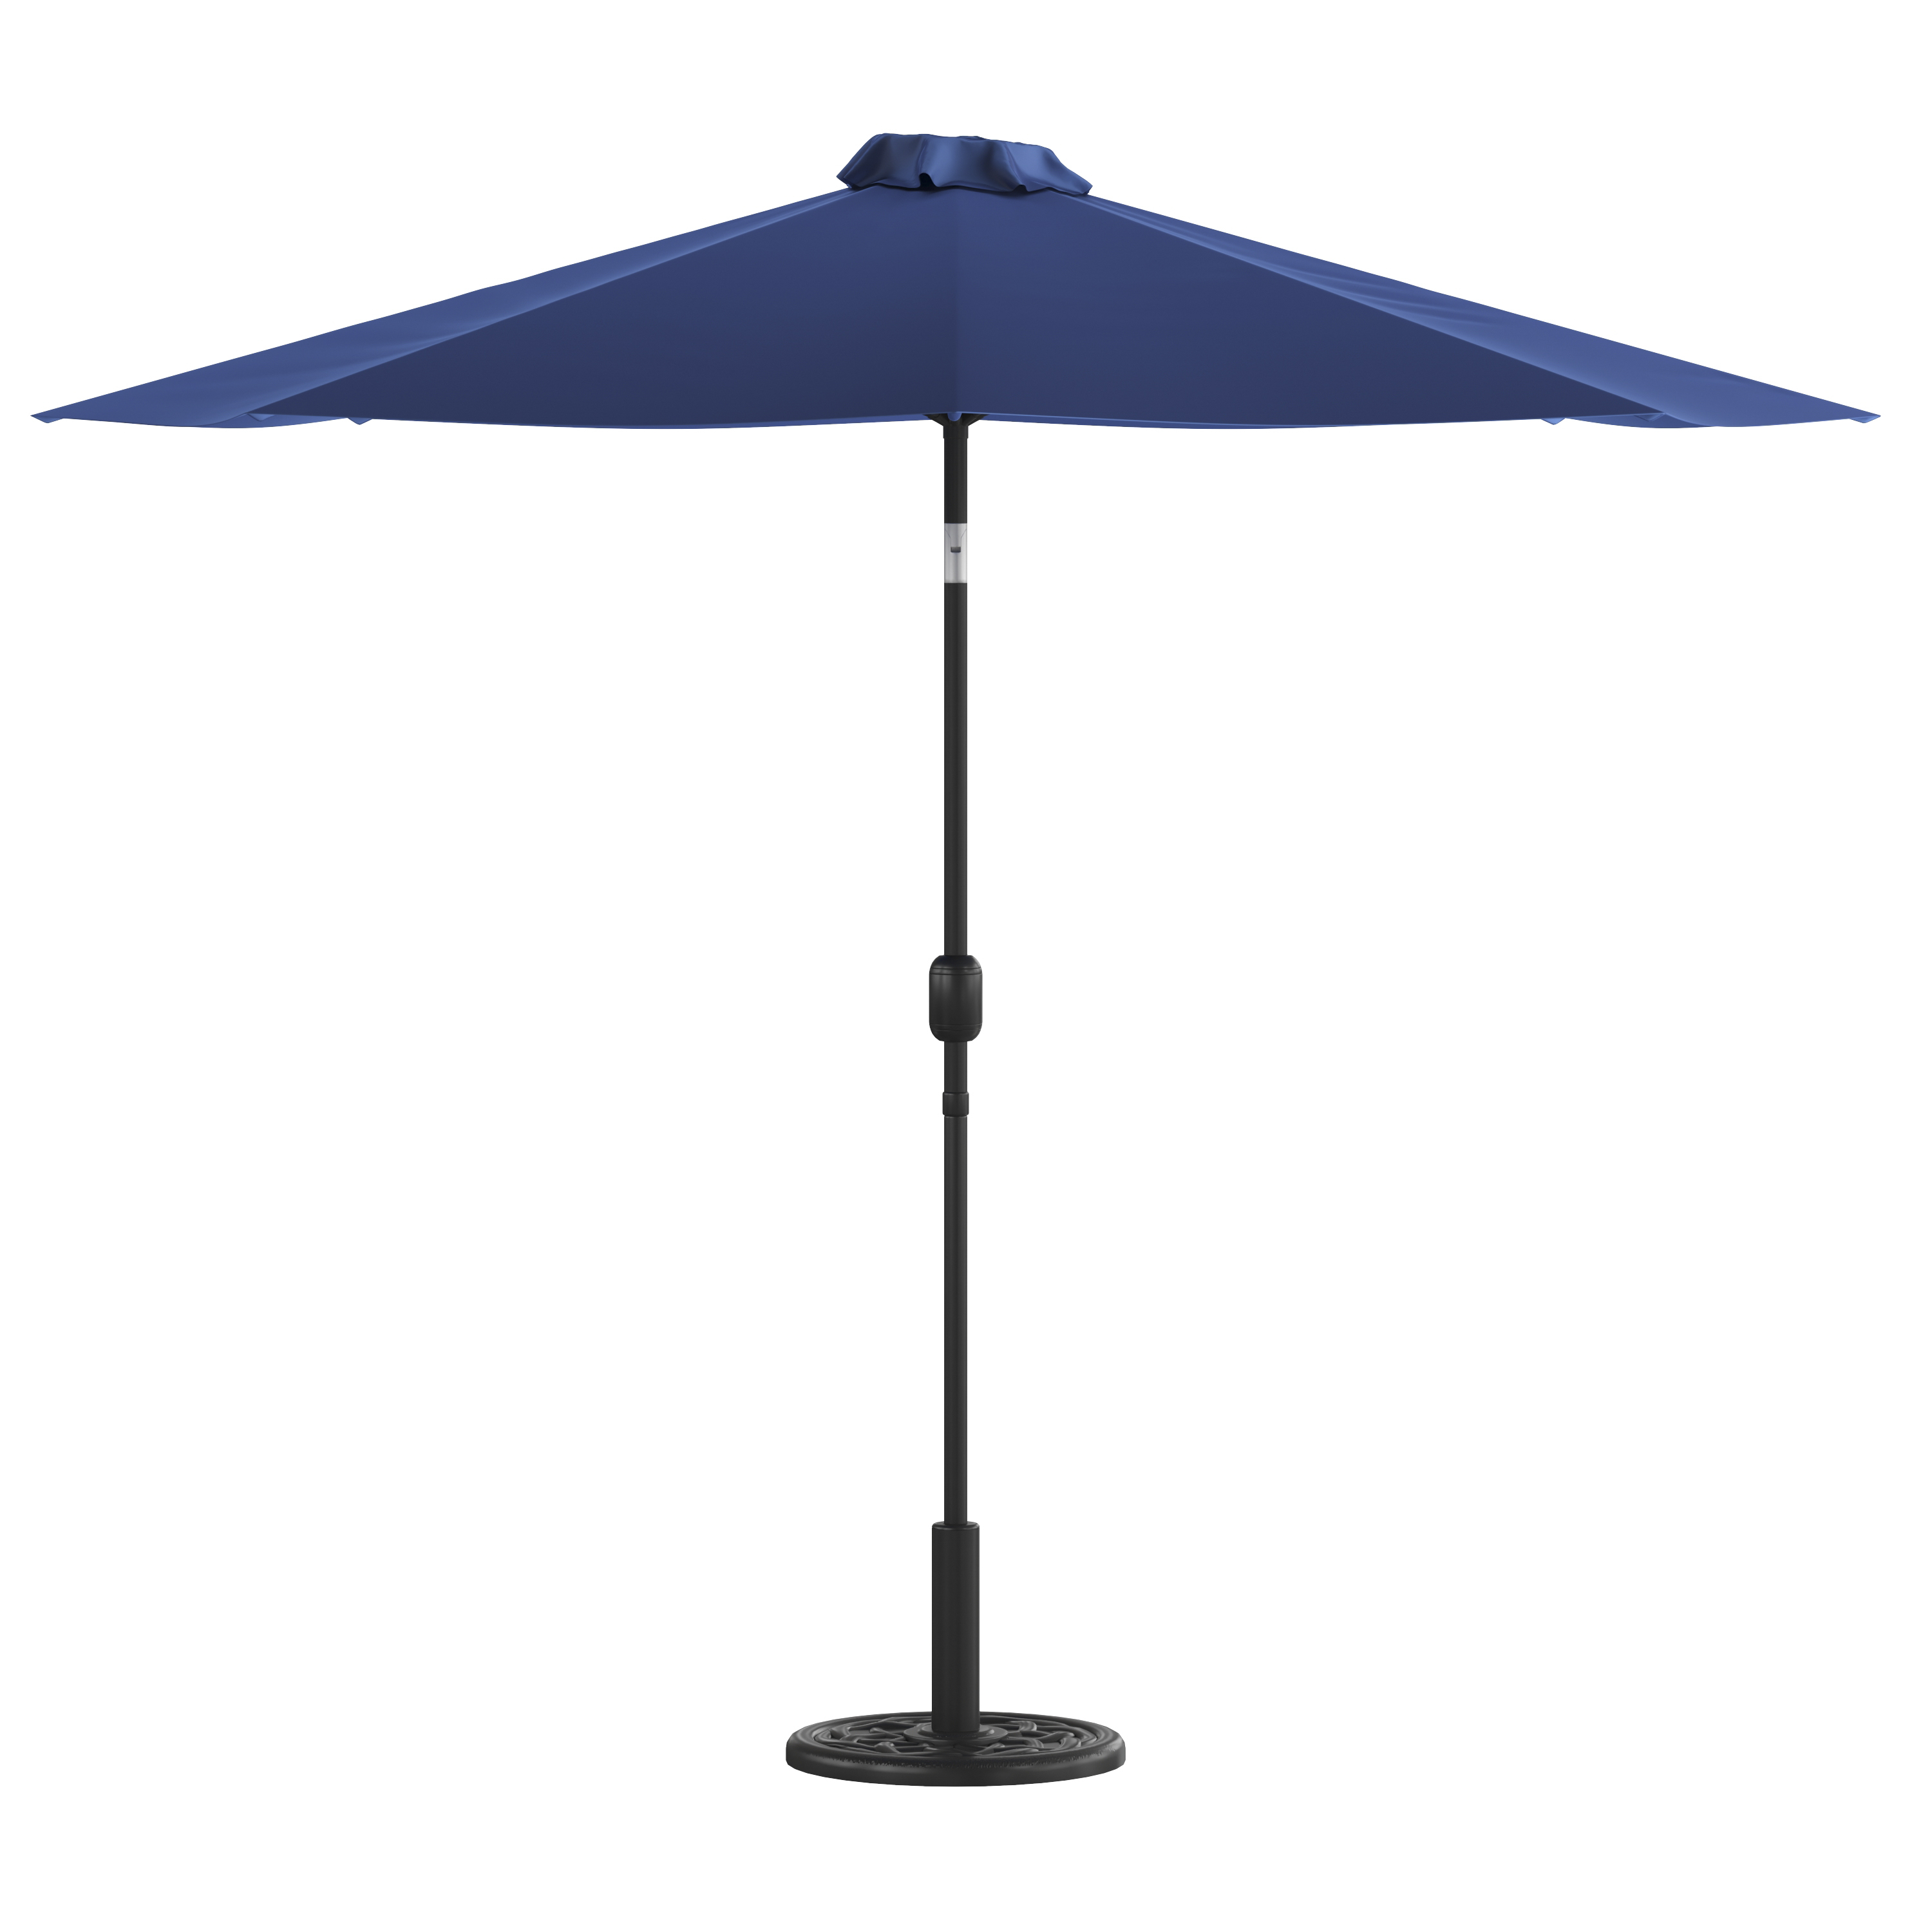 Flash Furniture GM-402003-UB19B-NVY-GG Sunny Navy 9 Ft. Round Umbrella - Crank and Tilt Function. Standing Umbrella Base